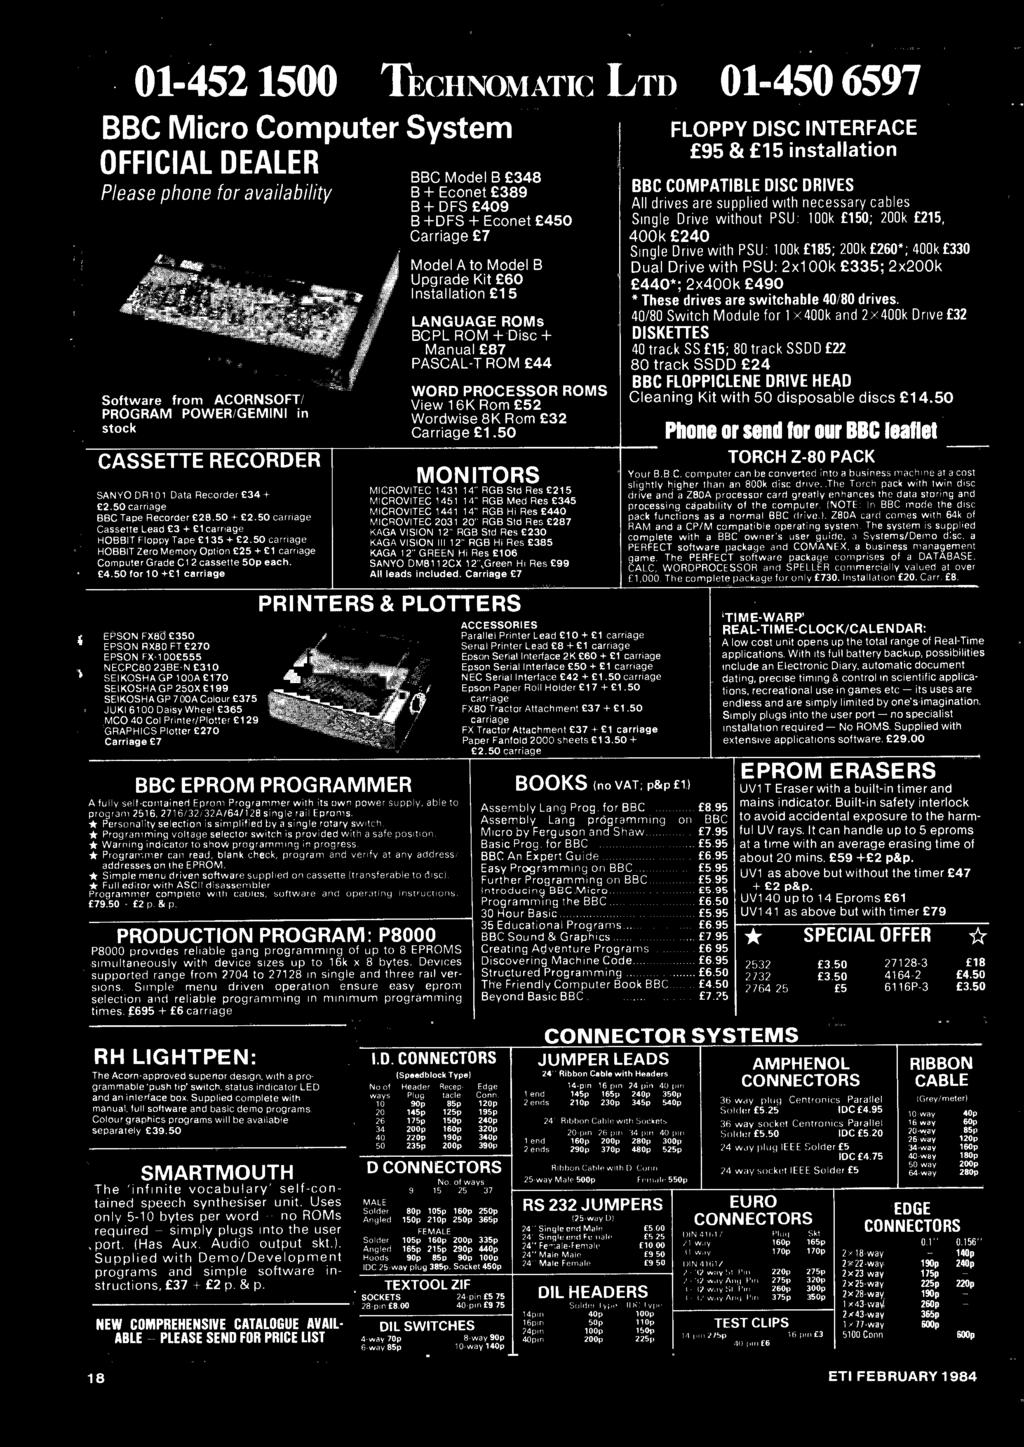 50 carriage HOBBIT Zero Memory Option 25 + 1 carriage Computer Grade Cl 2 cassette 50p each. 4.